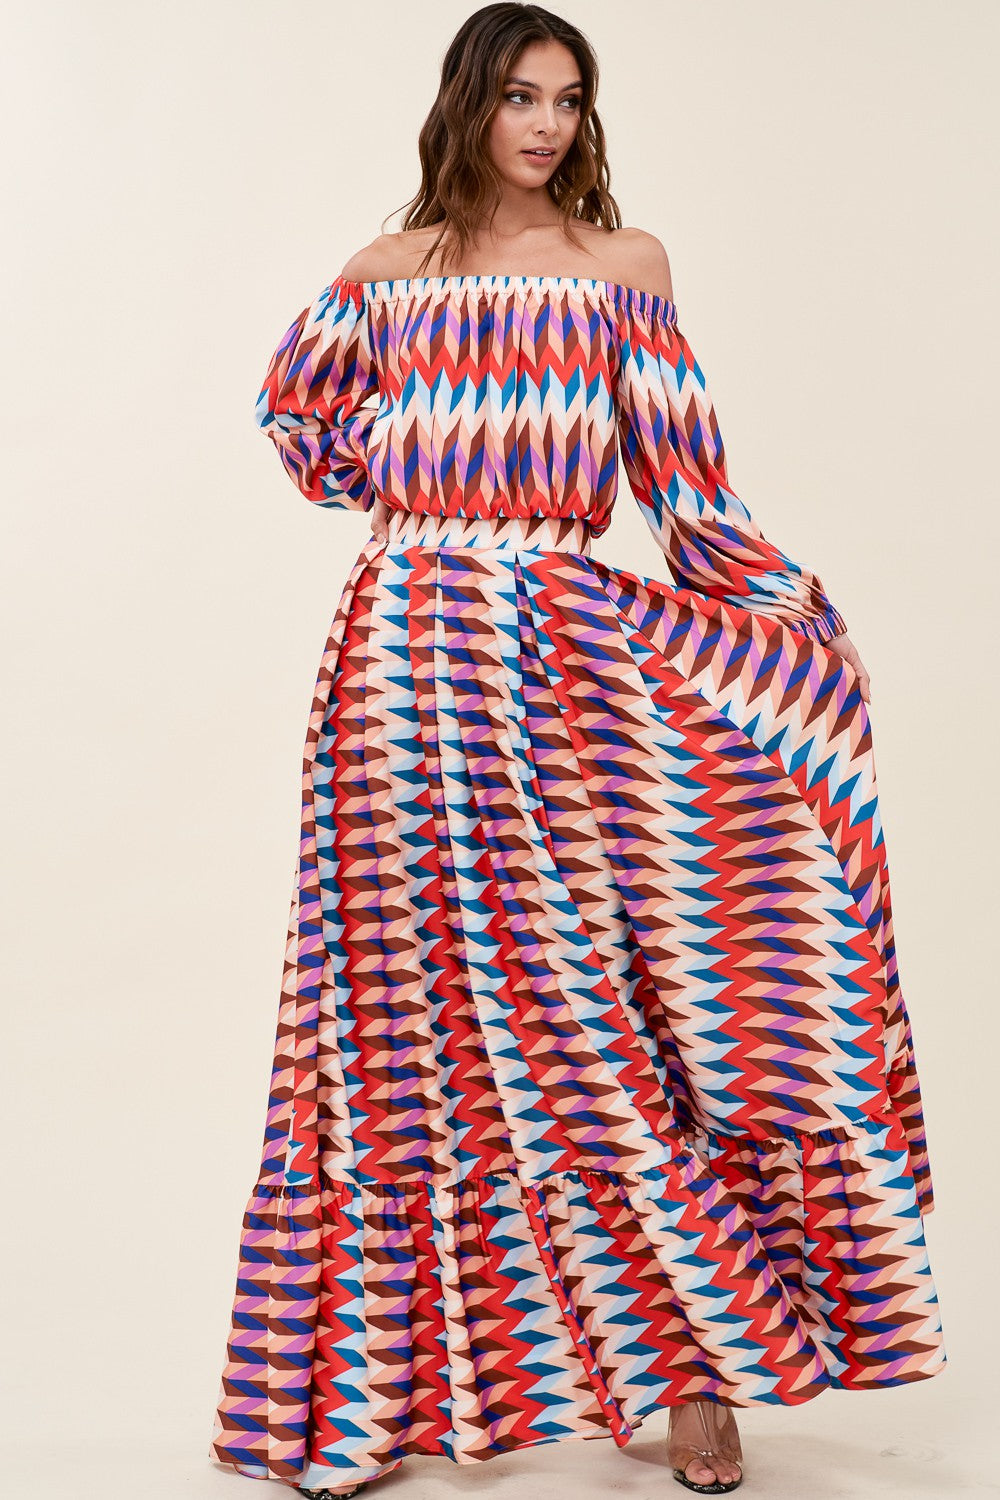 Stripe Illusions 2pc Skirt Set